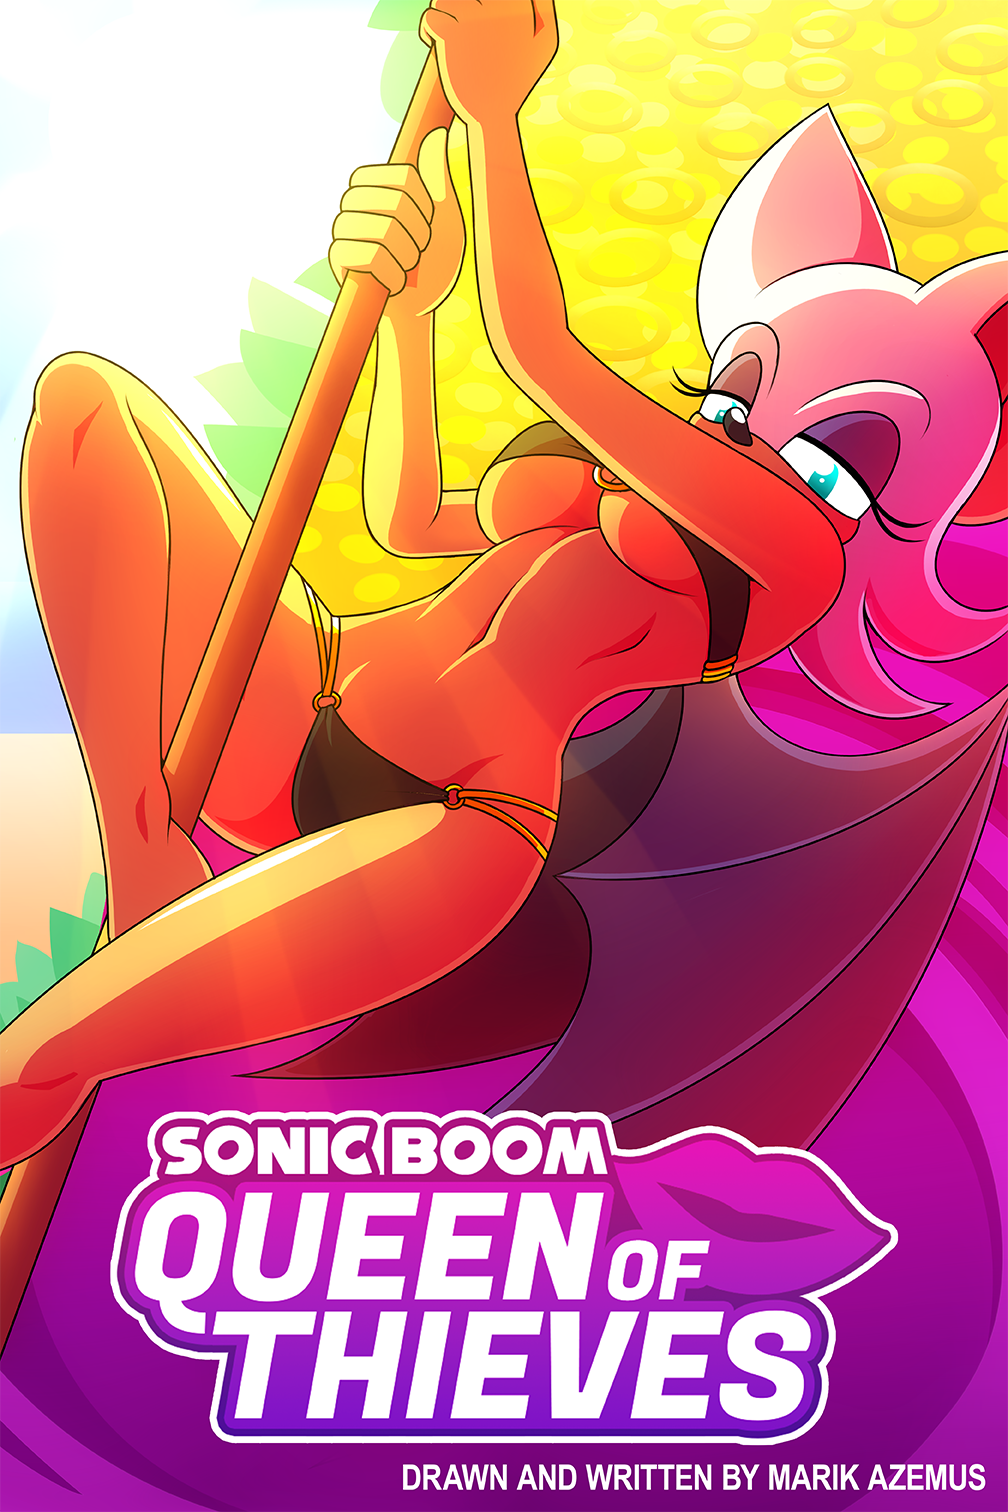 Sonic Porn Comics - Sonic Boom Queen of Thieves by Marik Azemus - Parody, Porn ...